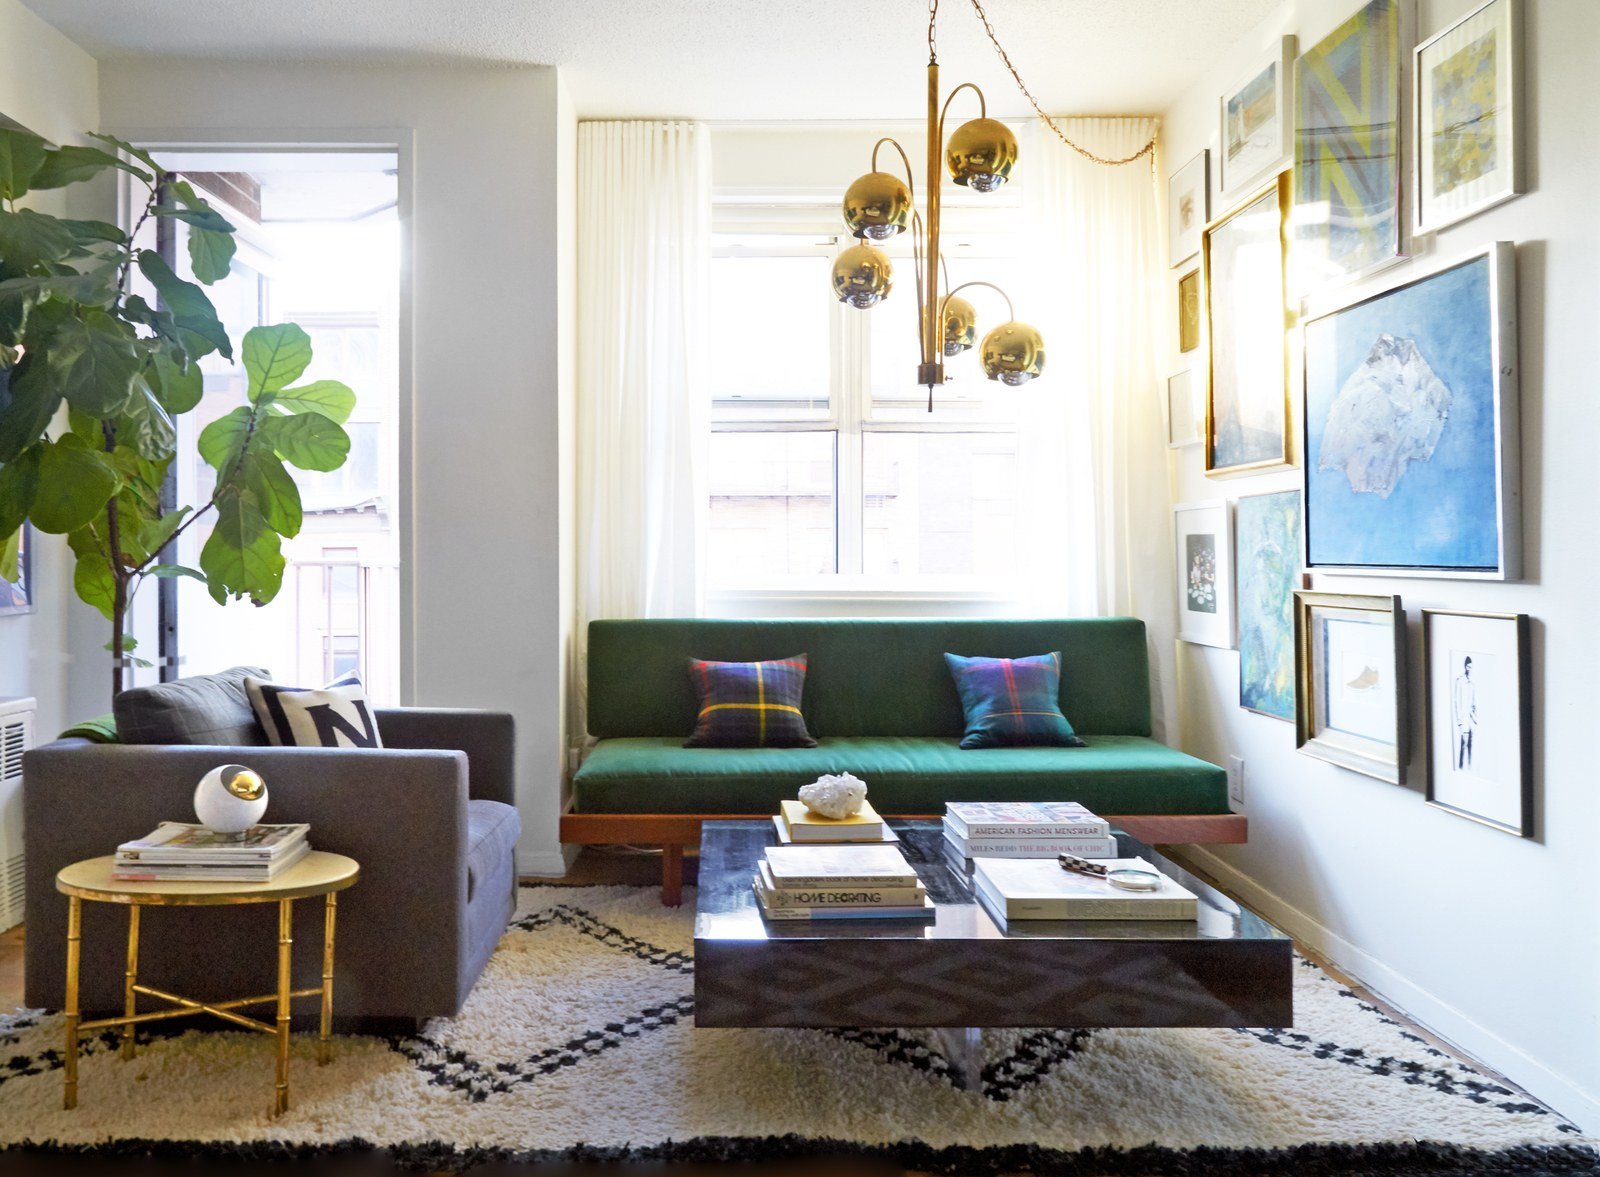 Decor Ideas for Studio Apartments Inspirational How to Decorate A Studio Apartment Tips for Studio Living &amp; Decor